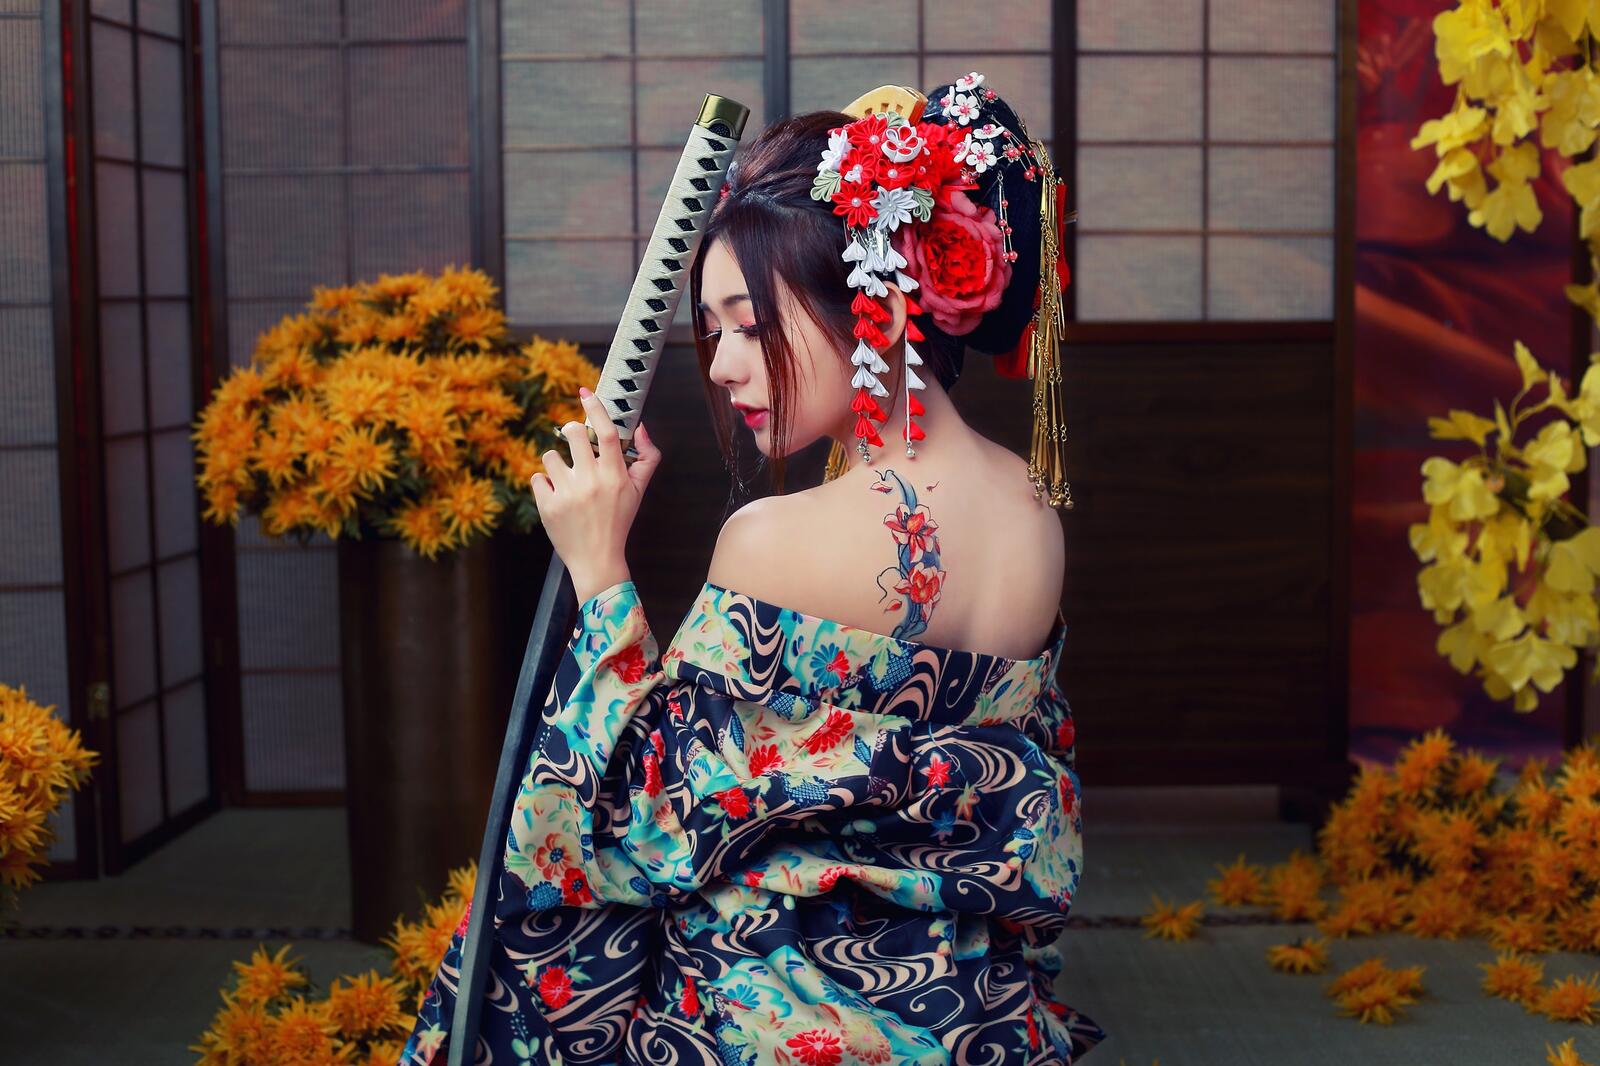 Wallpapers style samurai glamour on the desktop